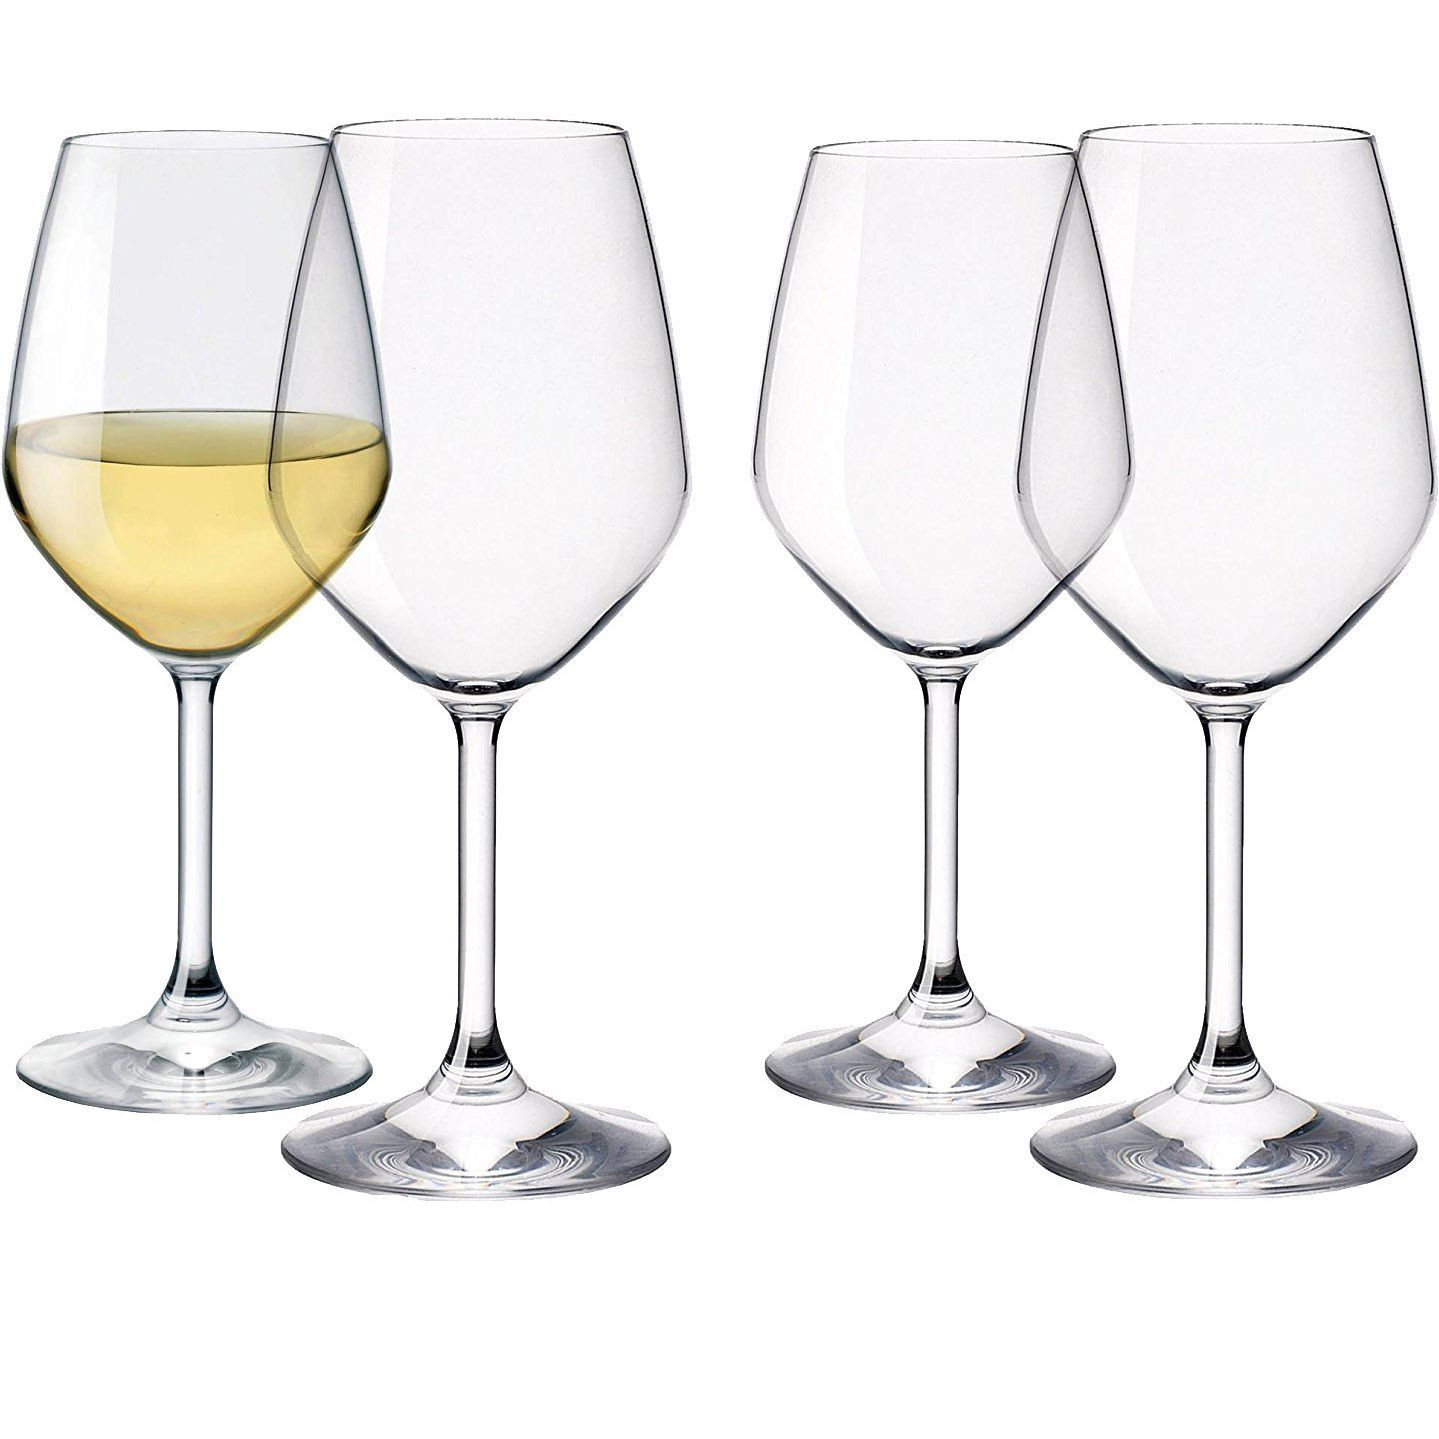 18 Amazing Large Wine Glass Vase 2024 free download large wine glass vase of the 7 best wine glasses to buy in 2018 regarding best overall white wine paksh italian white wine glasses